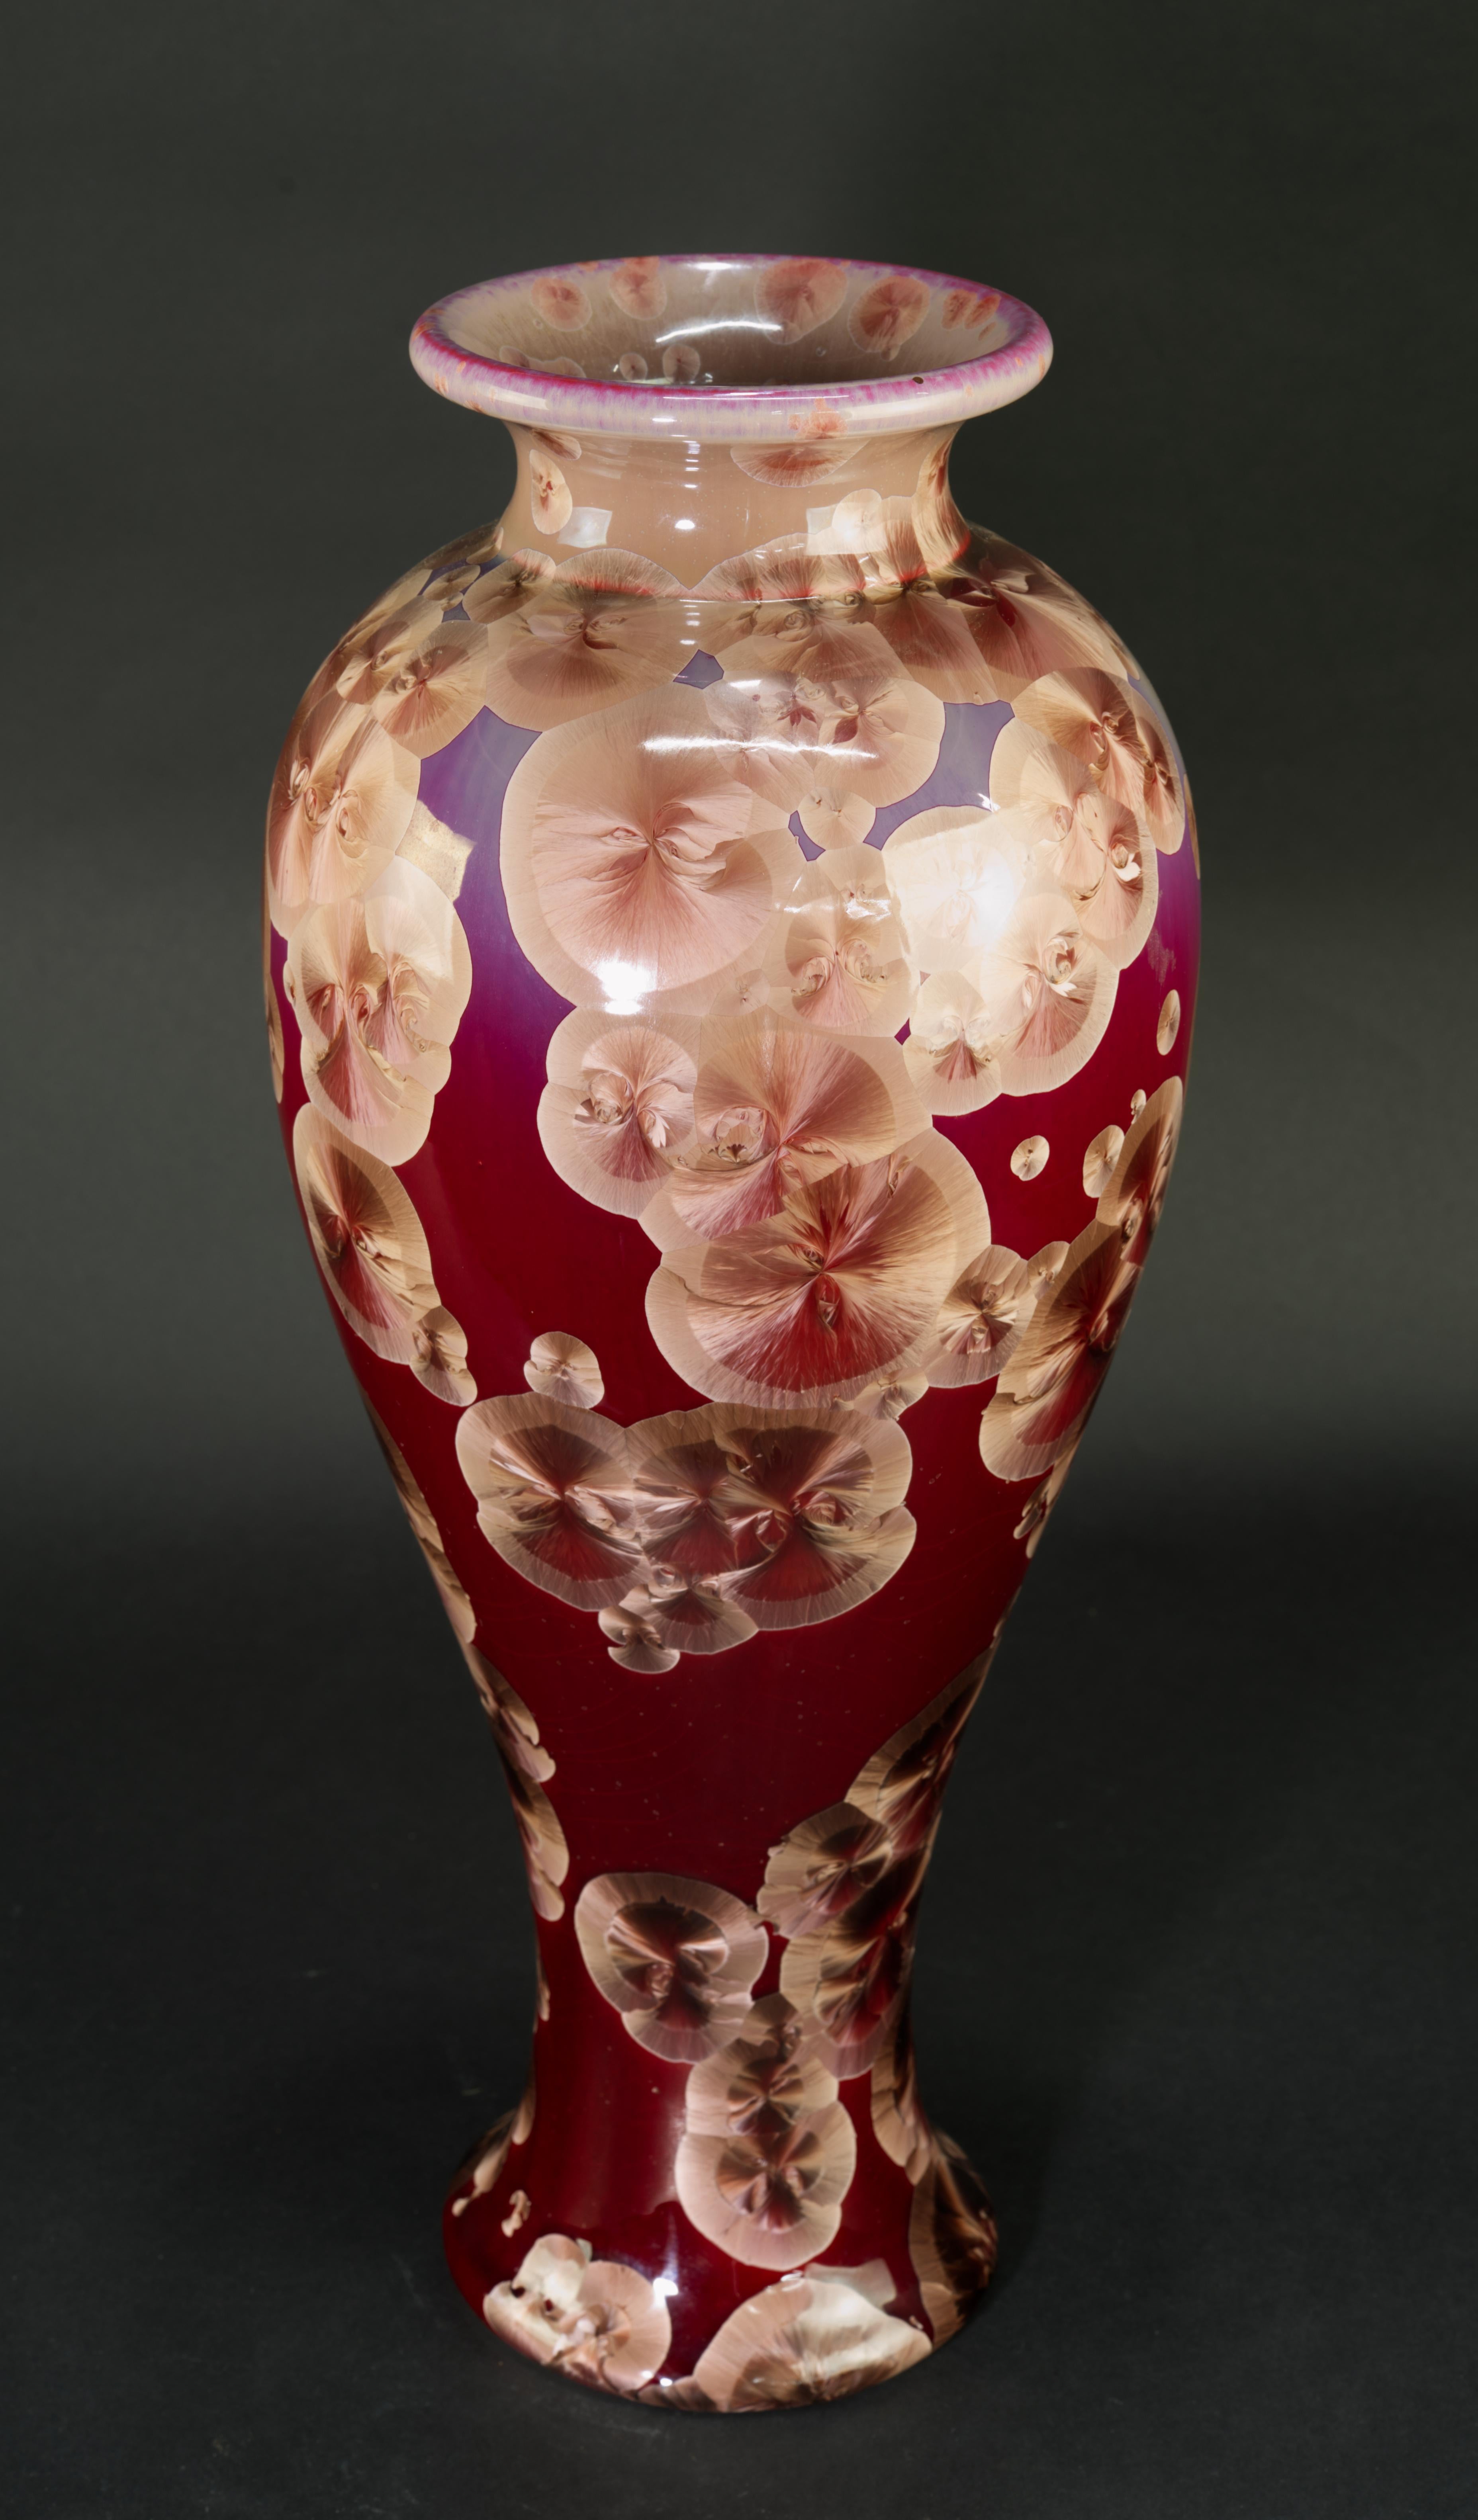 20th Century Crystalline Glaze Ceramic Vase, Red and Beige, American Art Studio Pottery For Sale